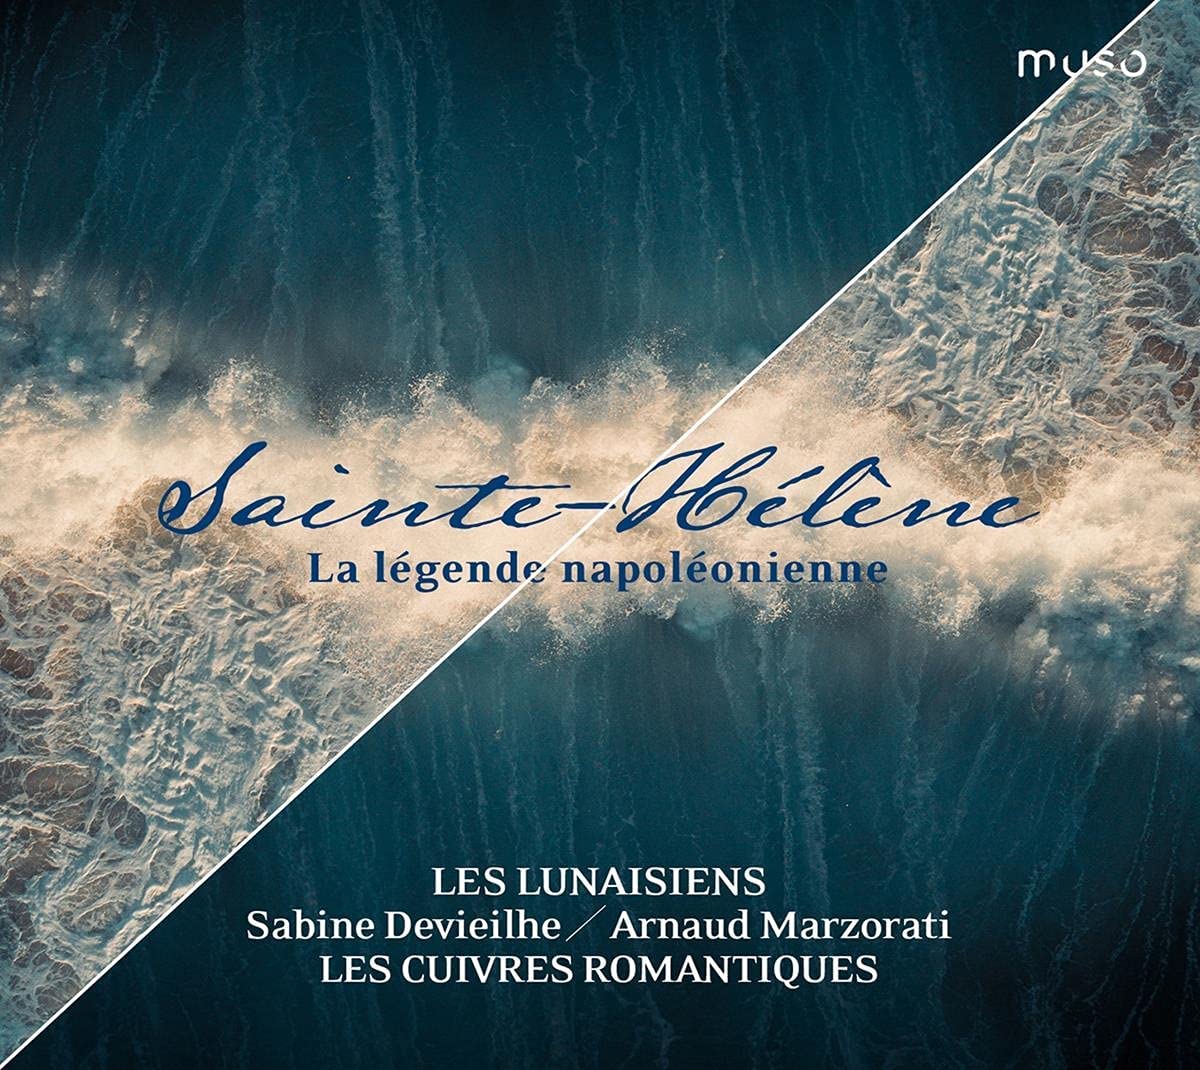 CD of Sainte Hélène Napoleonic music